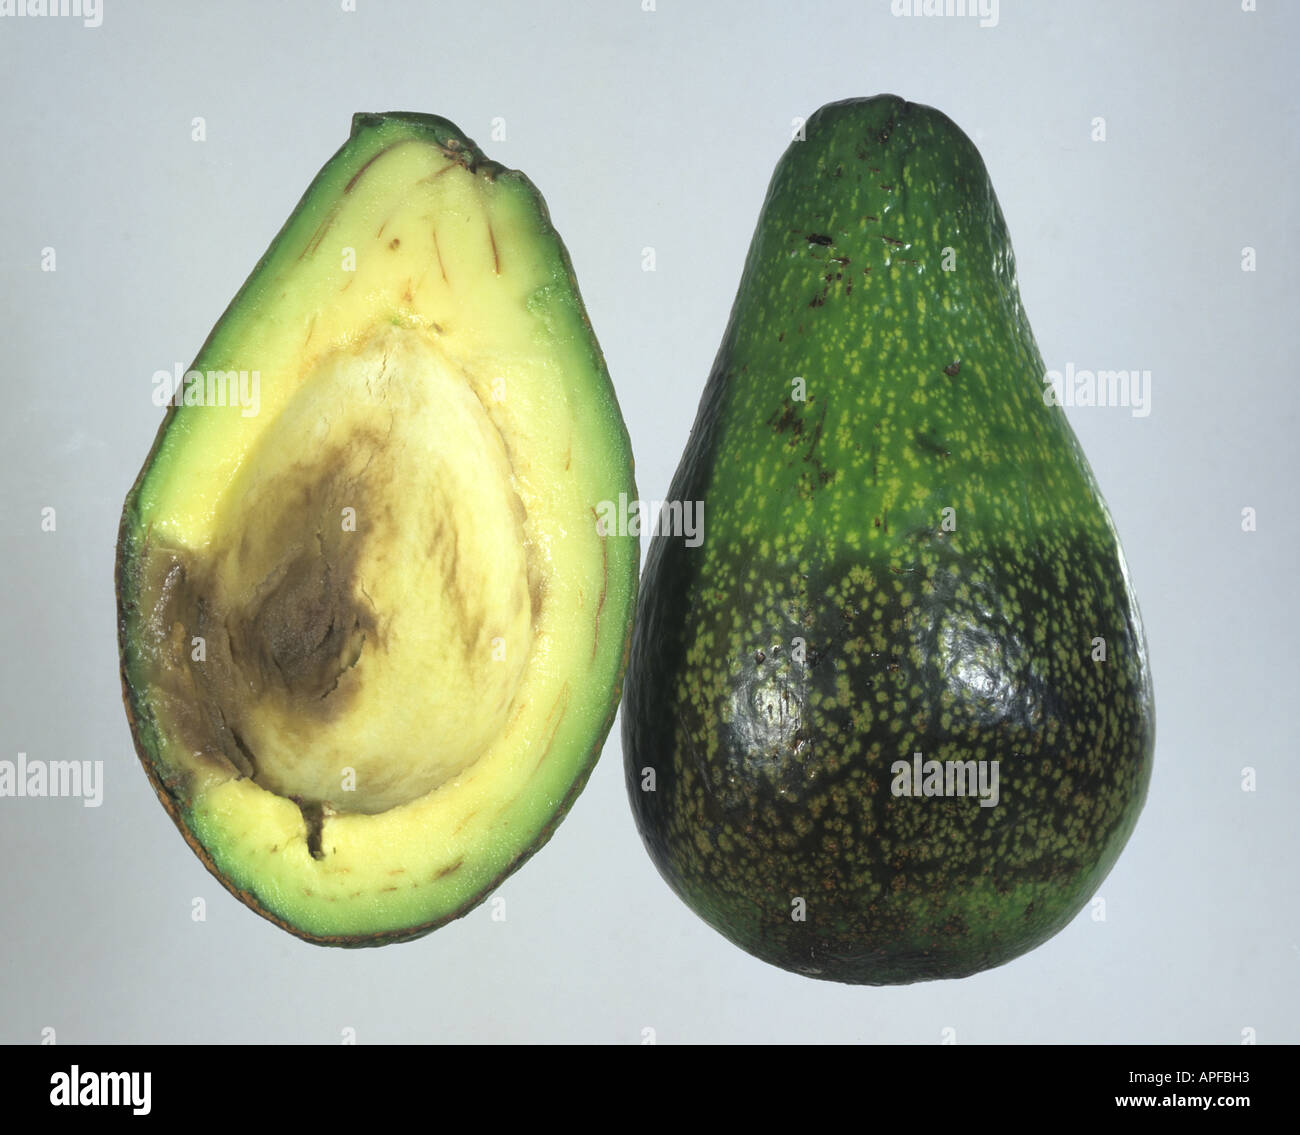 Dothoriella rot Botryosphaeria ribis symptom in sectioned avocado pear fruit Stock Photo